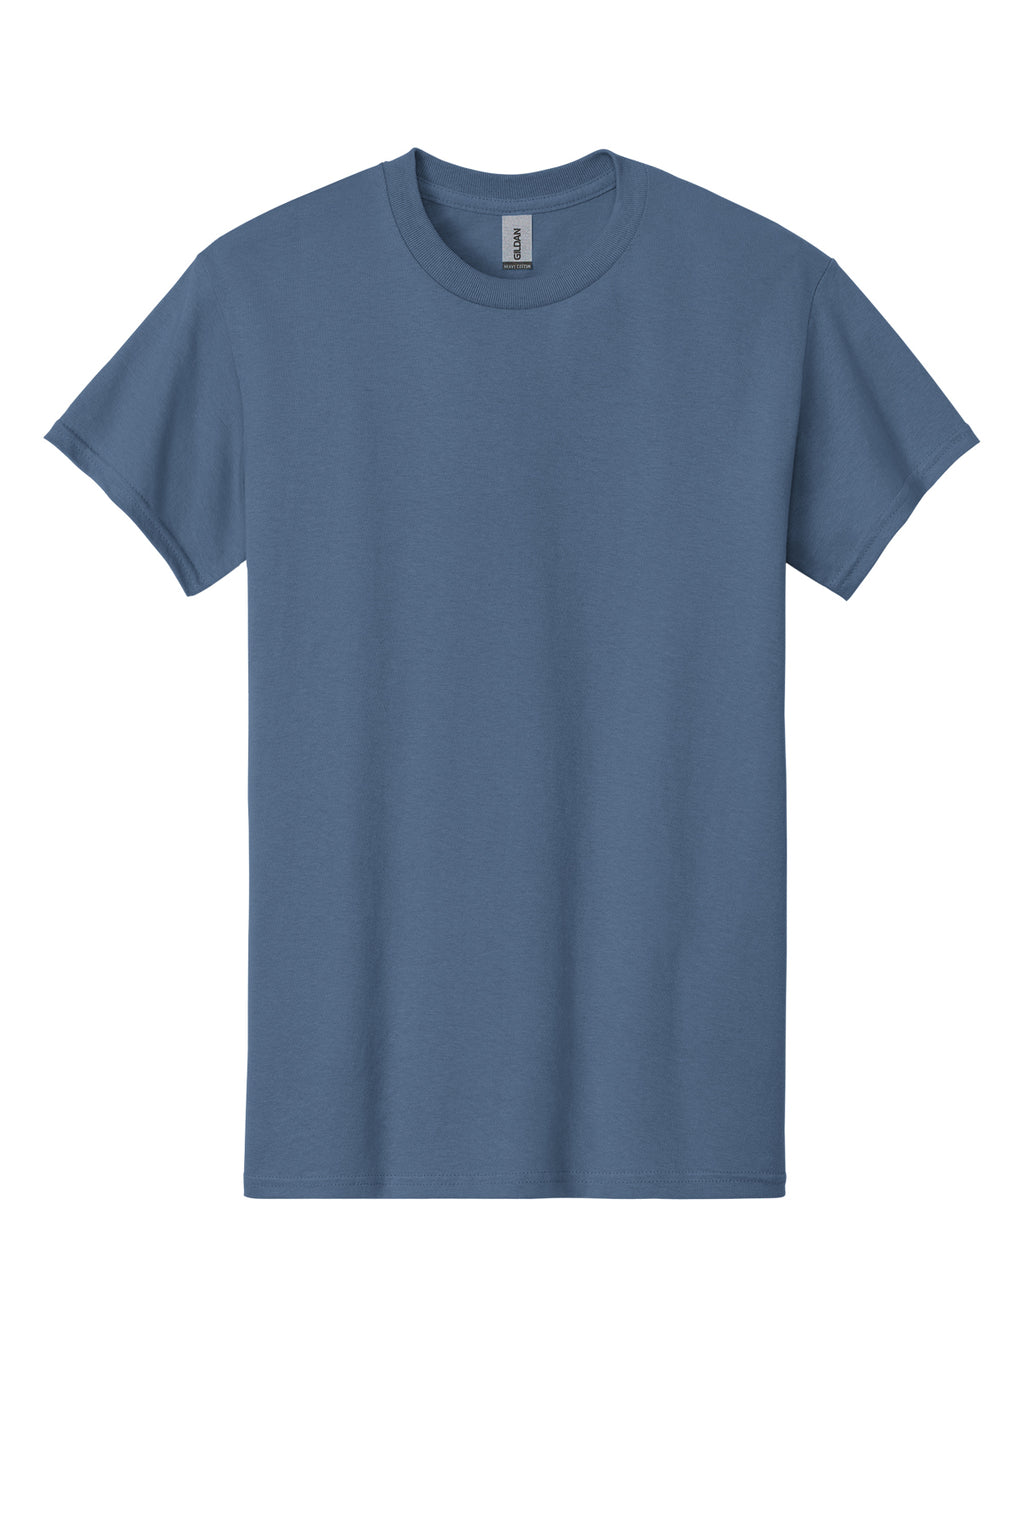 Gildan Mens/Unisex S/S Sleeve Shirts Indigo Blue